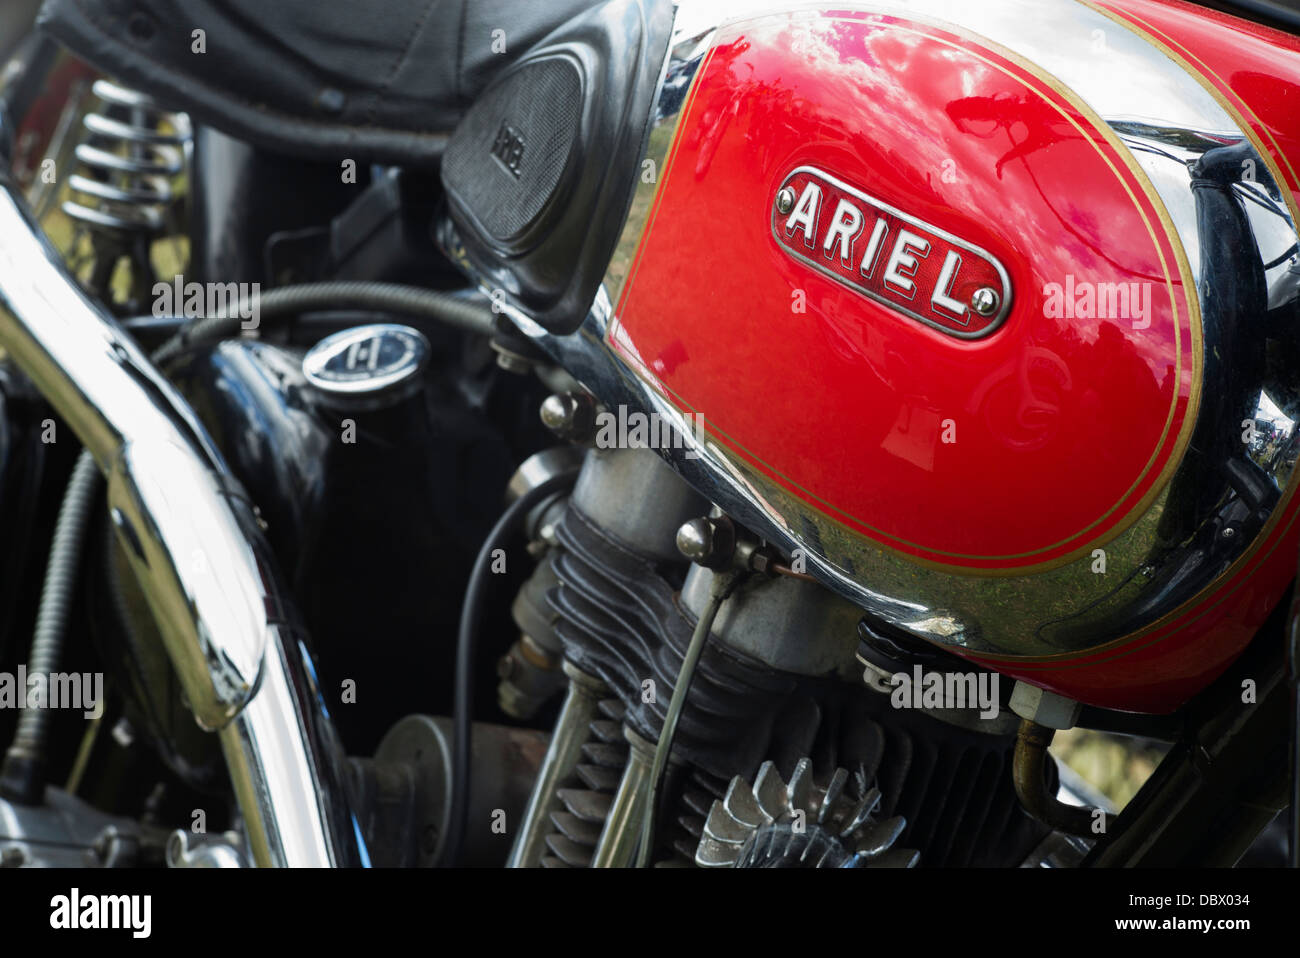 Ariel Moto. Moto classique britannique Banque D'Images